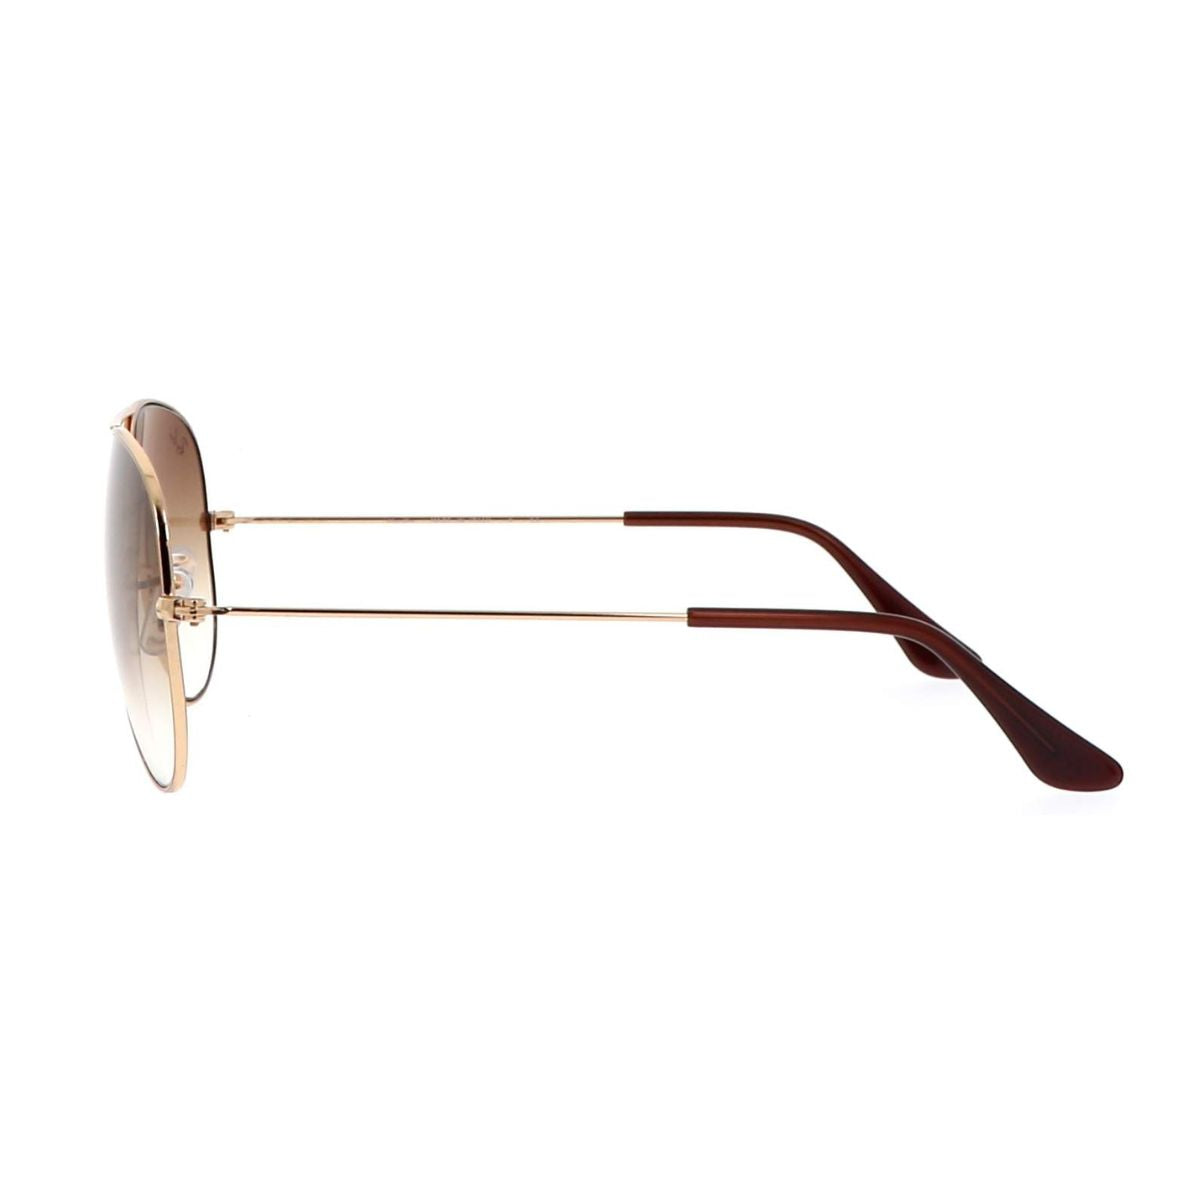 "Rayban 3025 001/51 UV Protected Eyewear Sunglasses For Men's At Optorium"